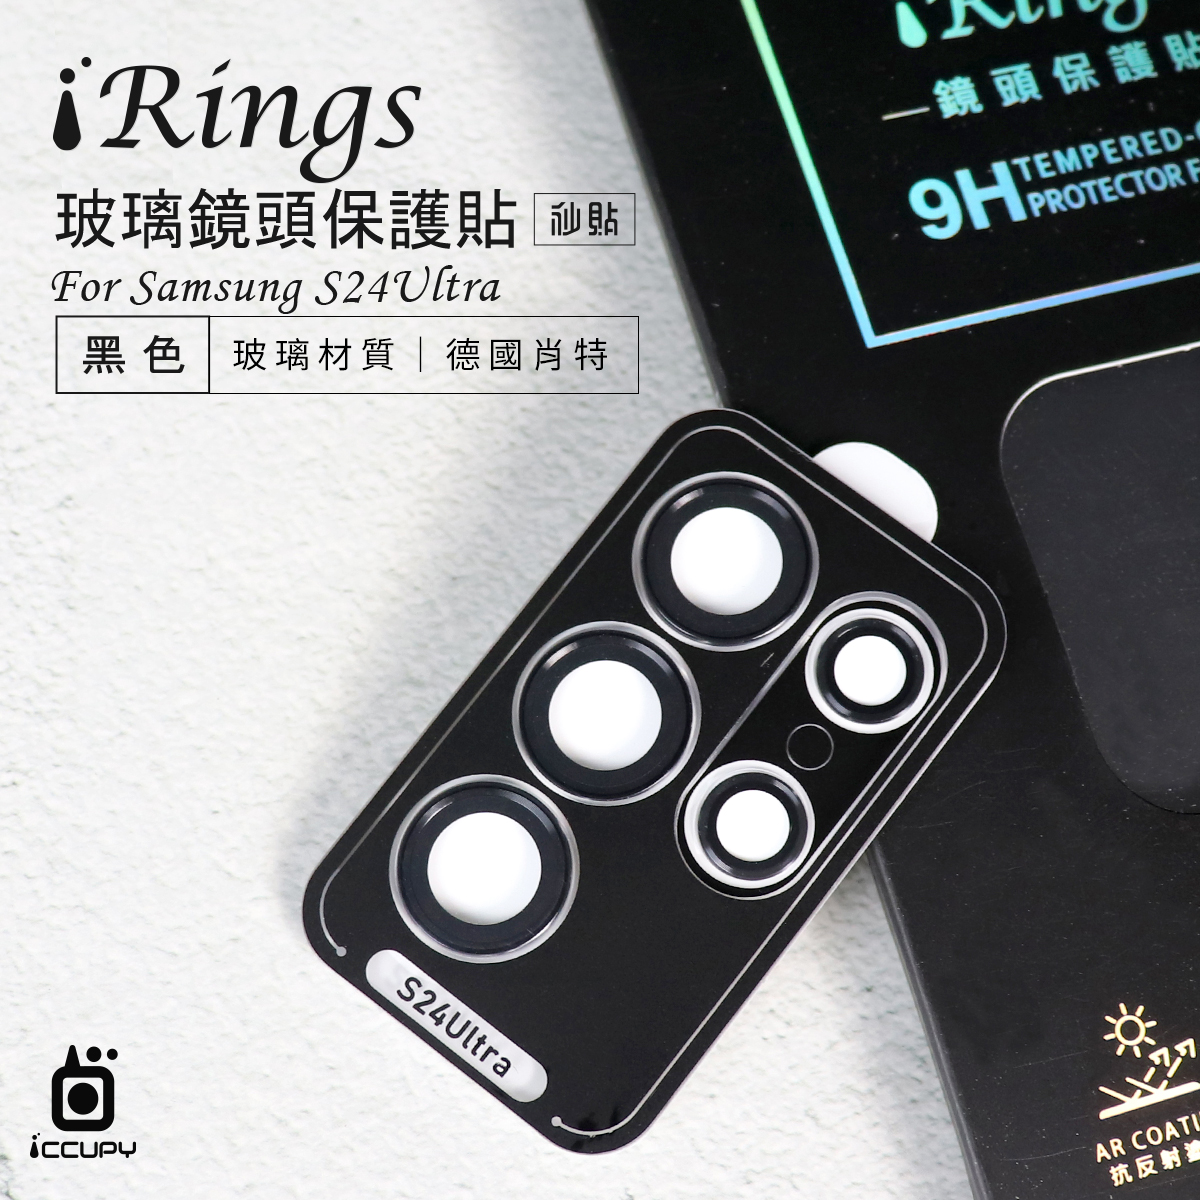 【iRings】玻璃鏡頭保護貼-5顆 FOR SAMSUNG S24 ULTRA (黑)